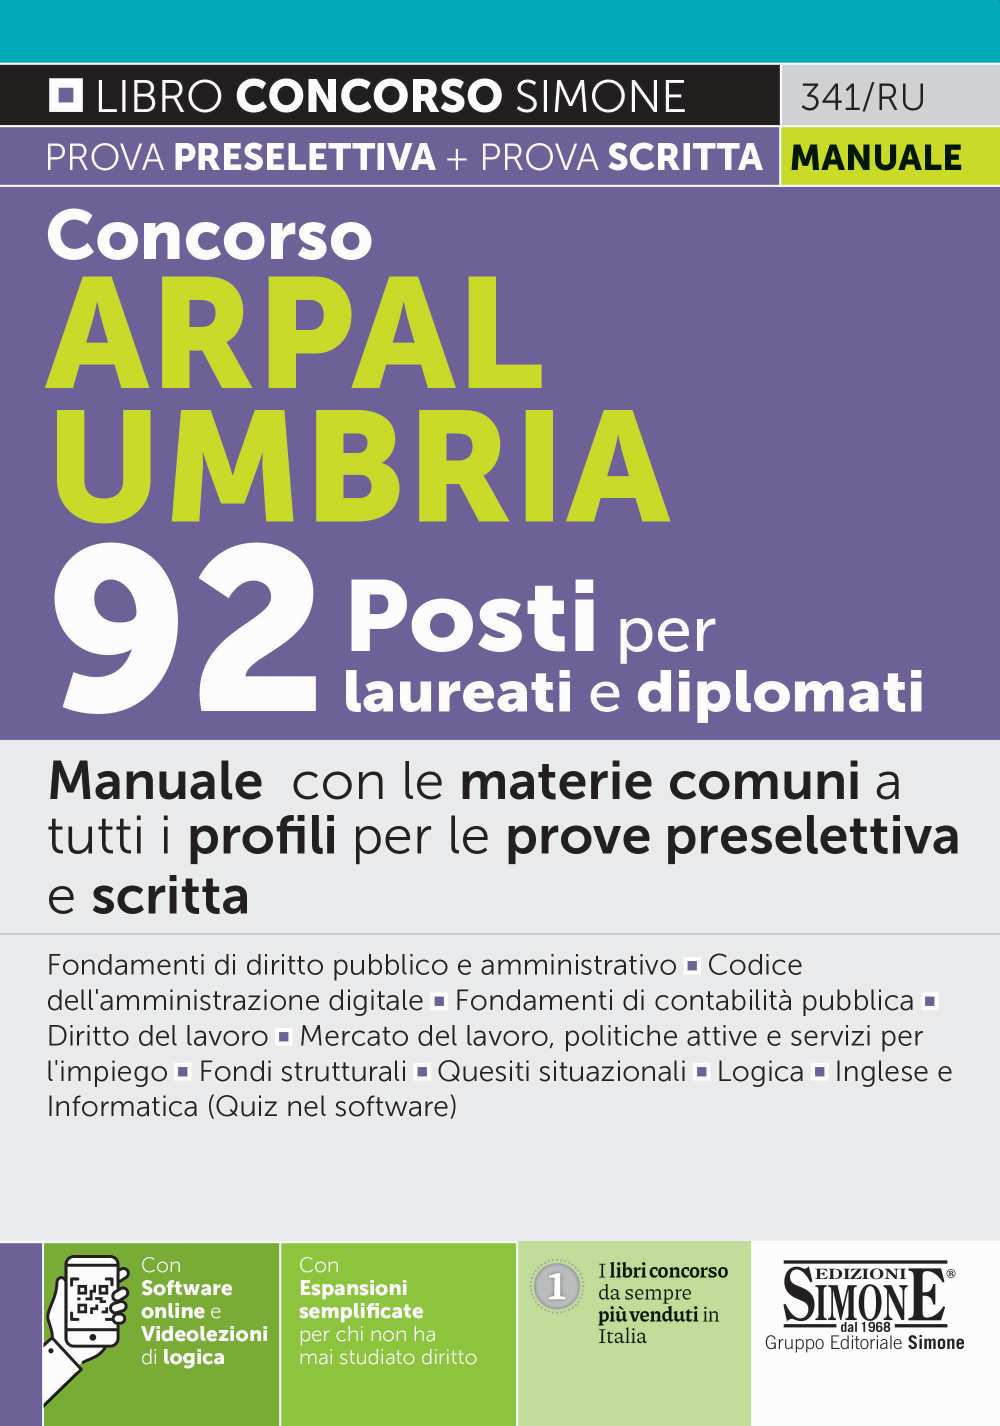 Concorso Arpal Umbria 92 Posti per laureati e diplomati - Manuale - 341/RU